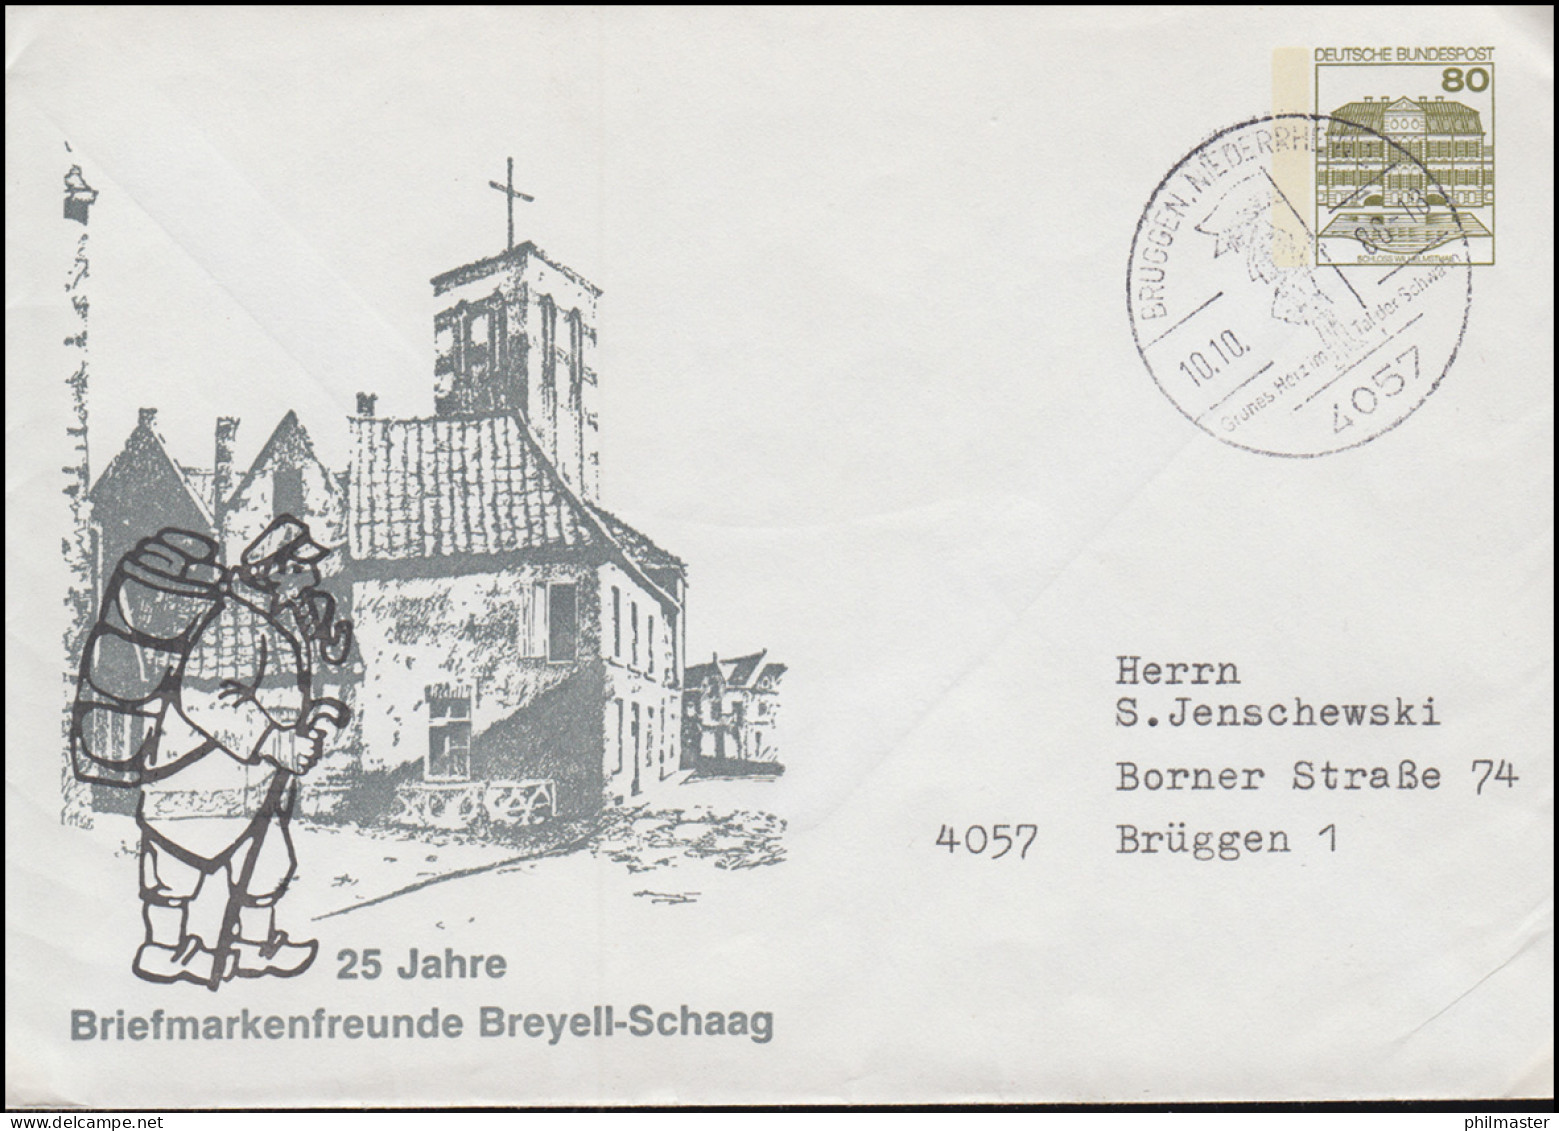 PU 117/10 BuS 25 Jahre Briefmarkenfreunde Breyell-Schaag 1987, SSt BRÜGGEN 1988 - Private Covers - Mint